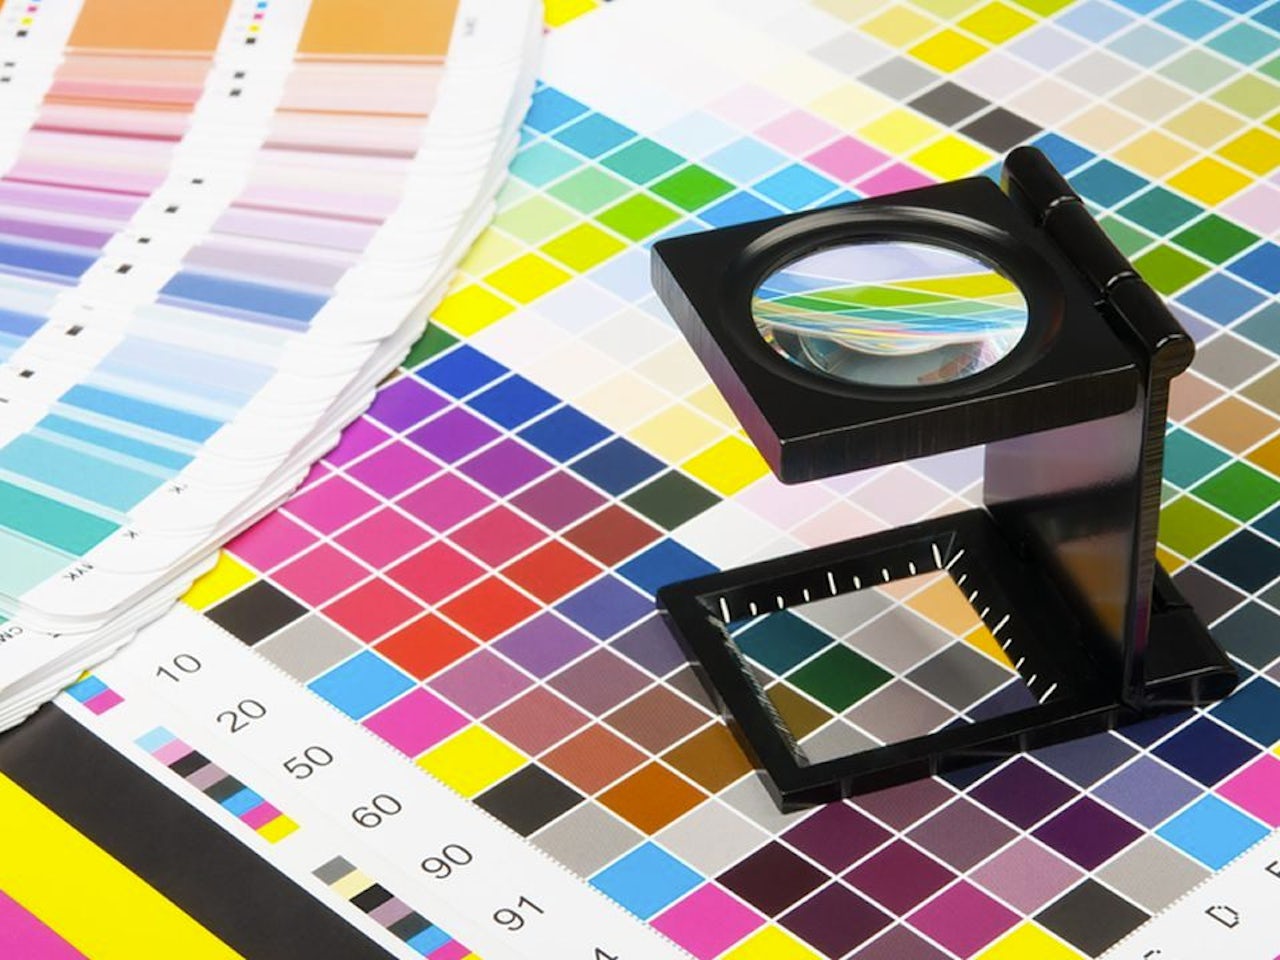 Bekostning Lamme Luscious Prepress Checklist: How to prepare your design for print - 99designs